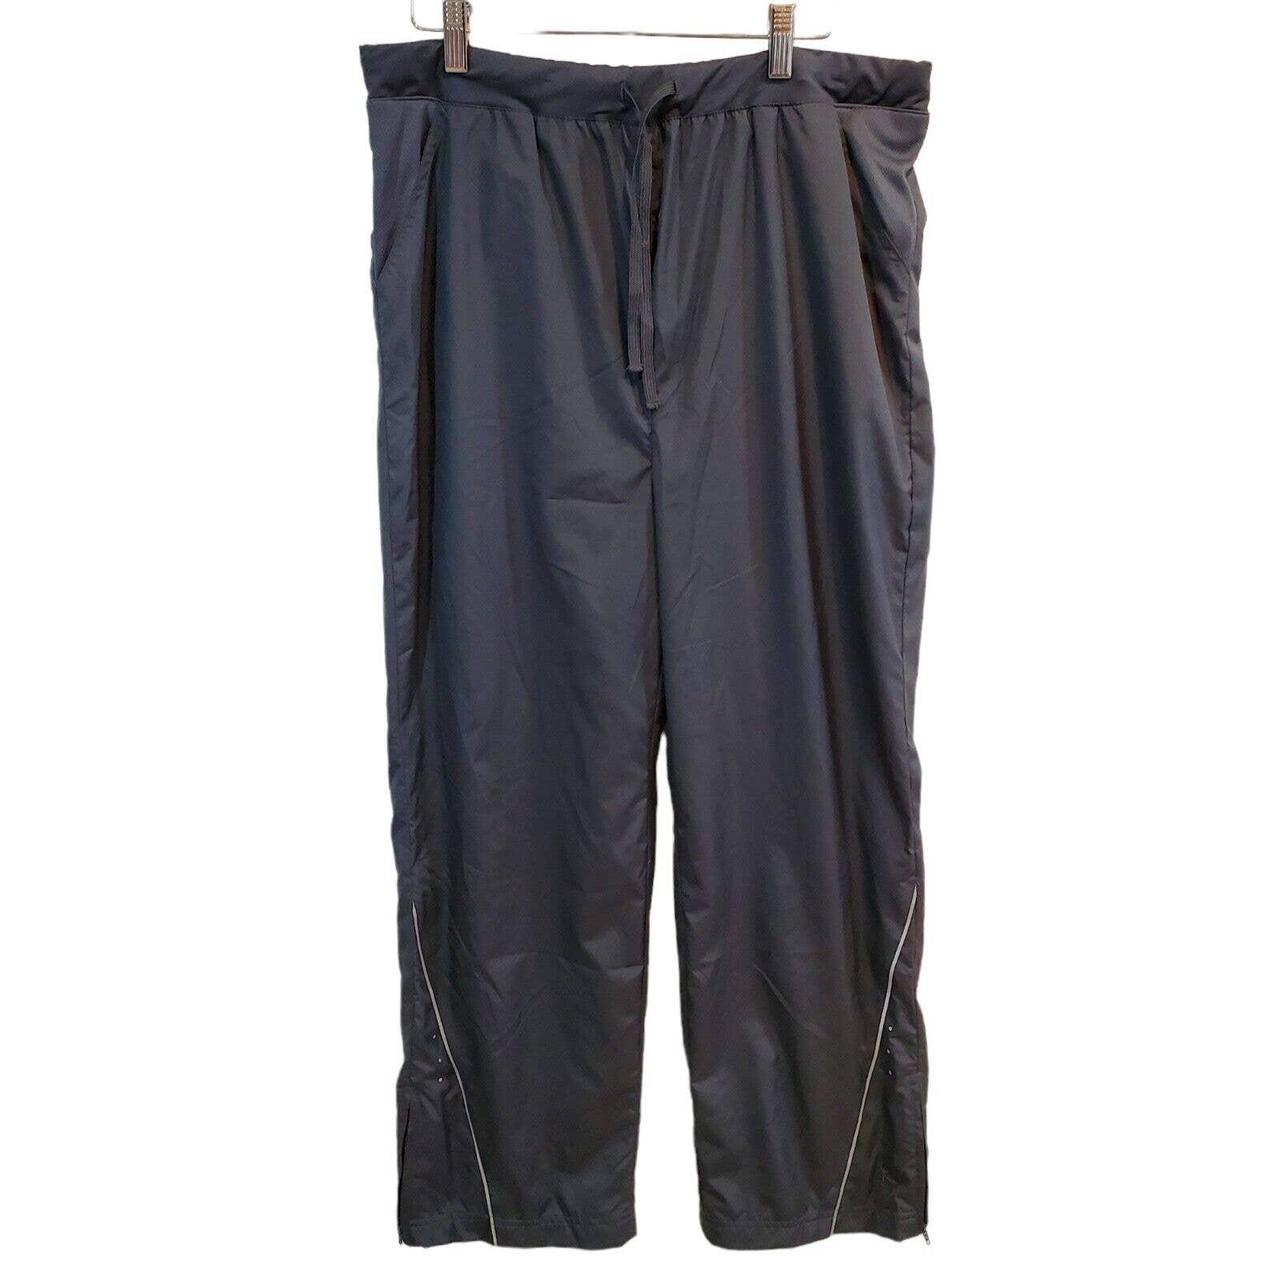 Danskin Now Pants Activewear Womens Large 12/14 Grey - Depop